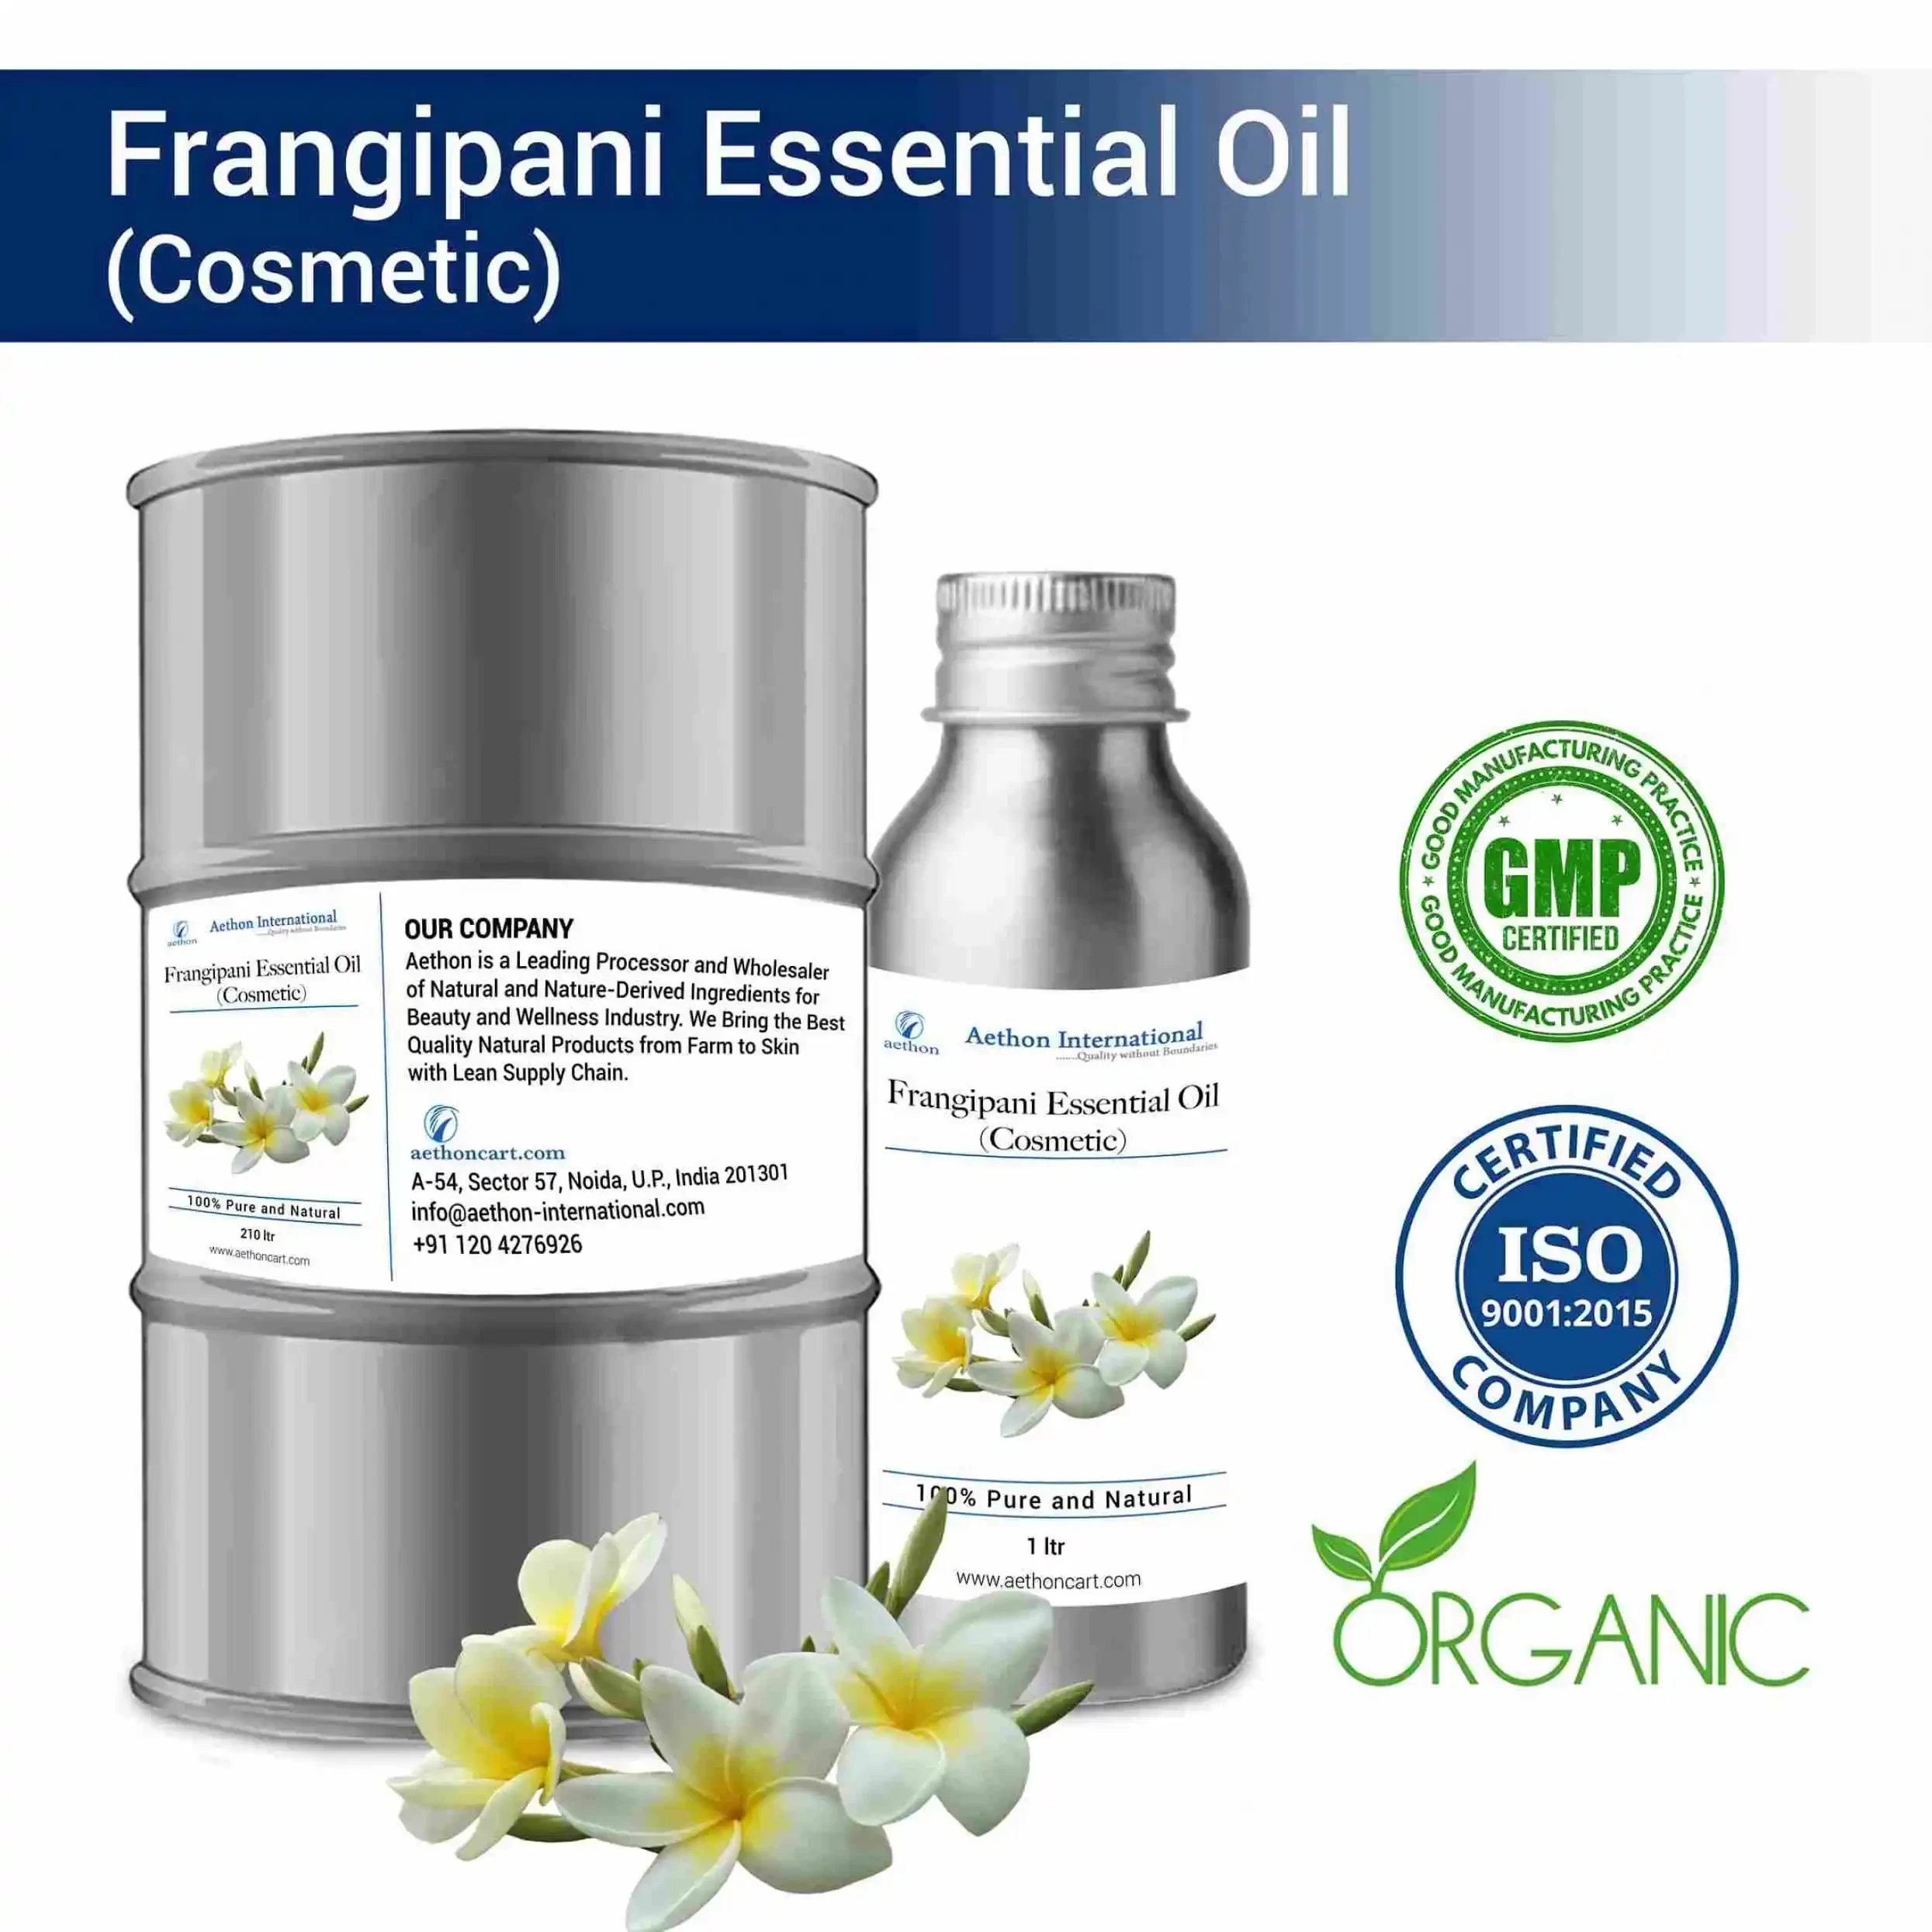 Frangipani Essential Oil (Cosmetic)